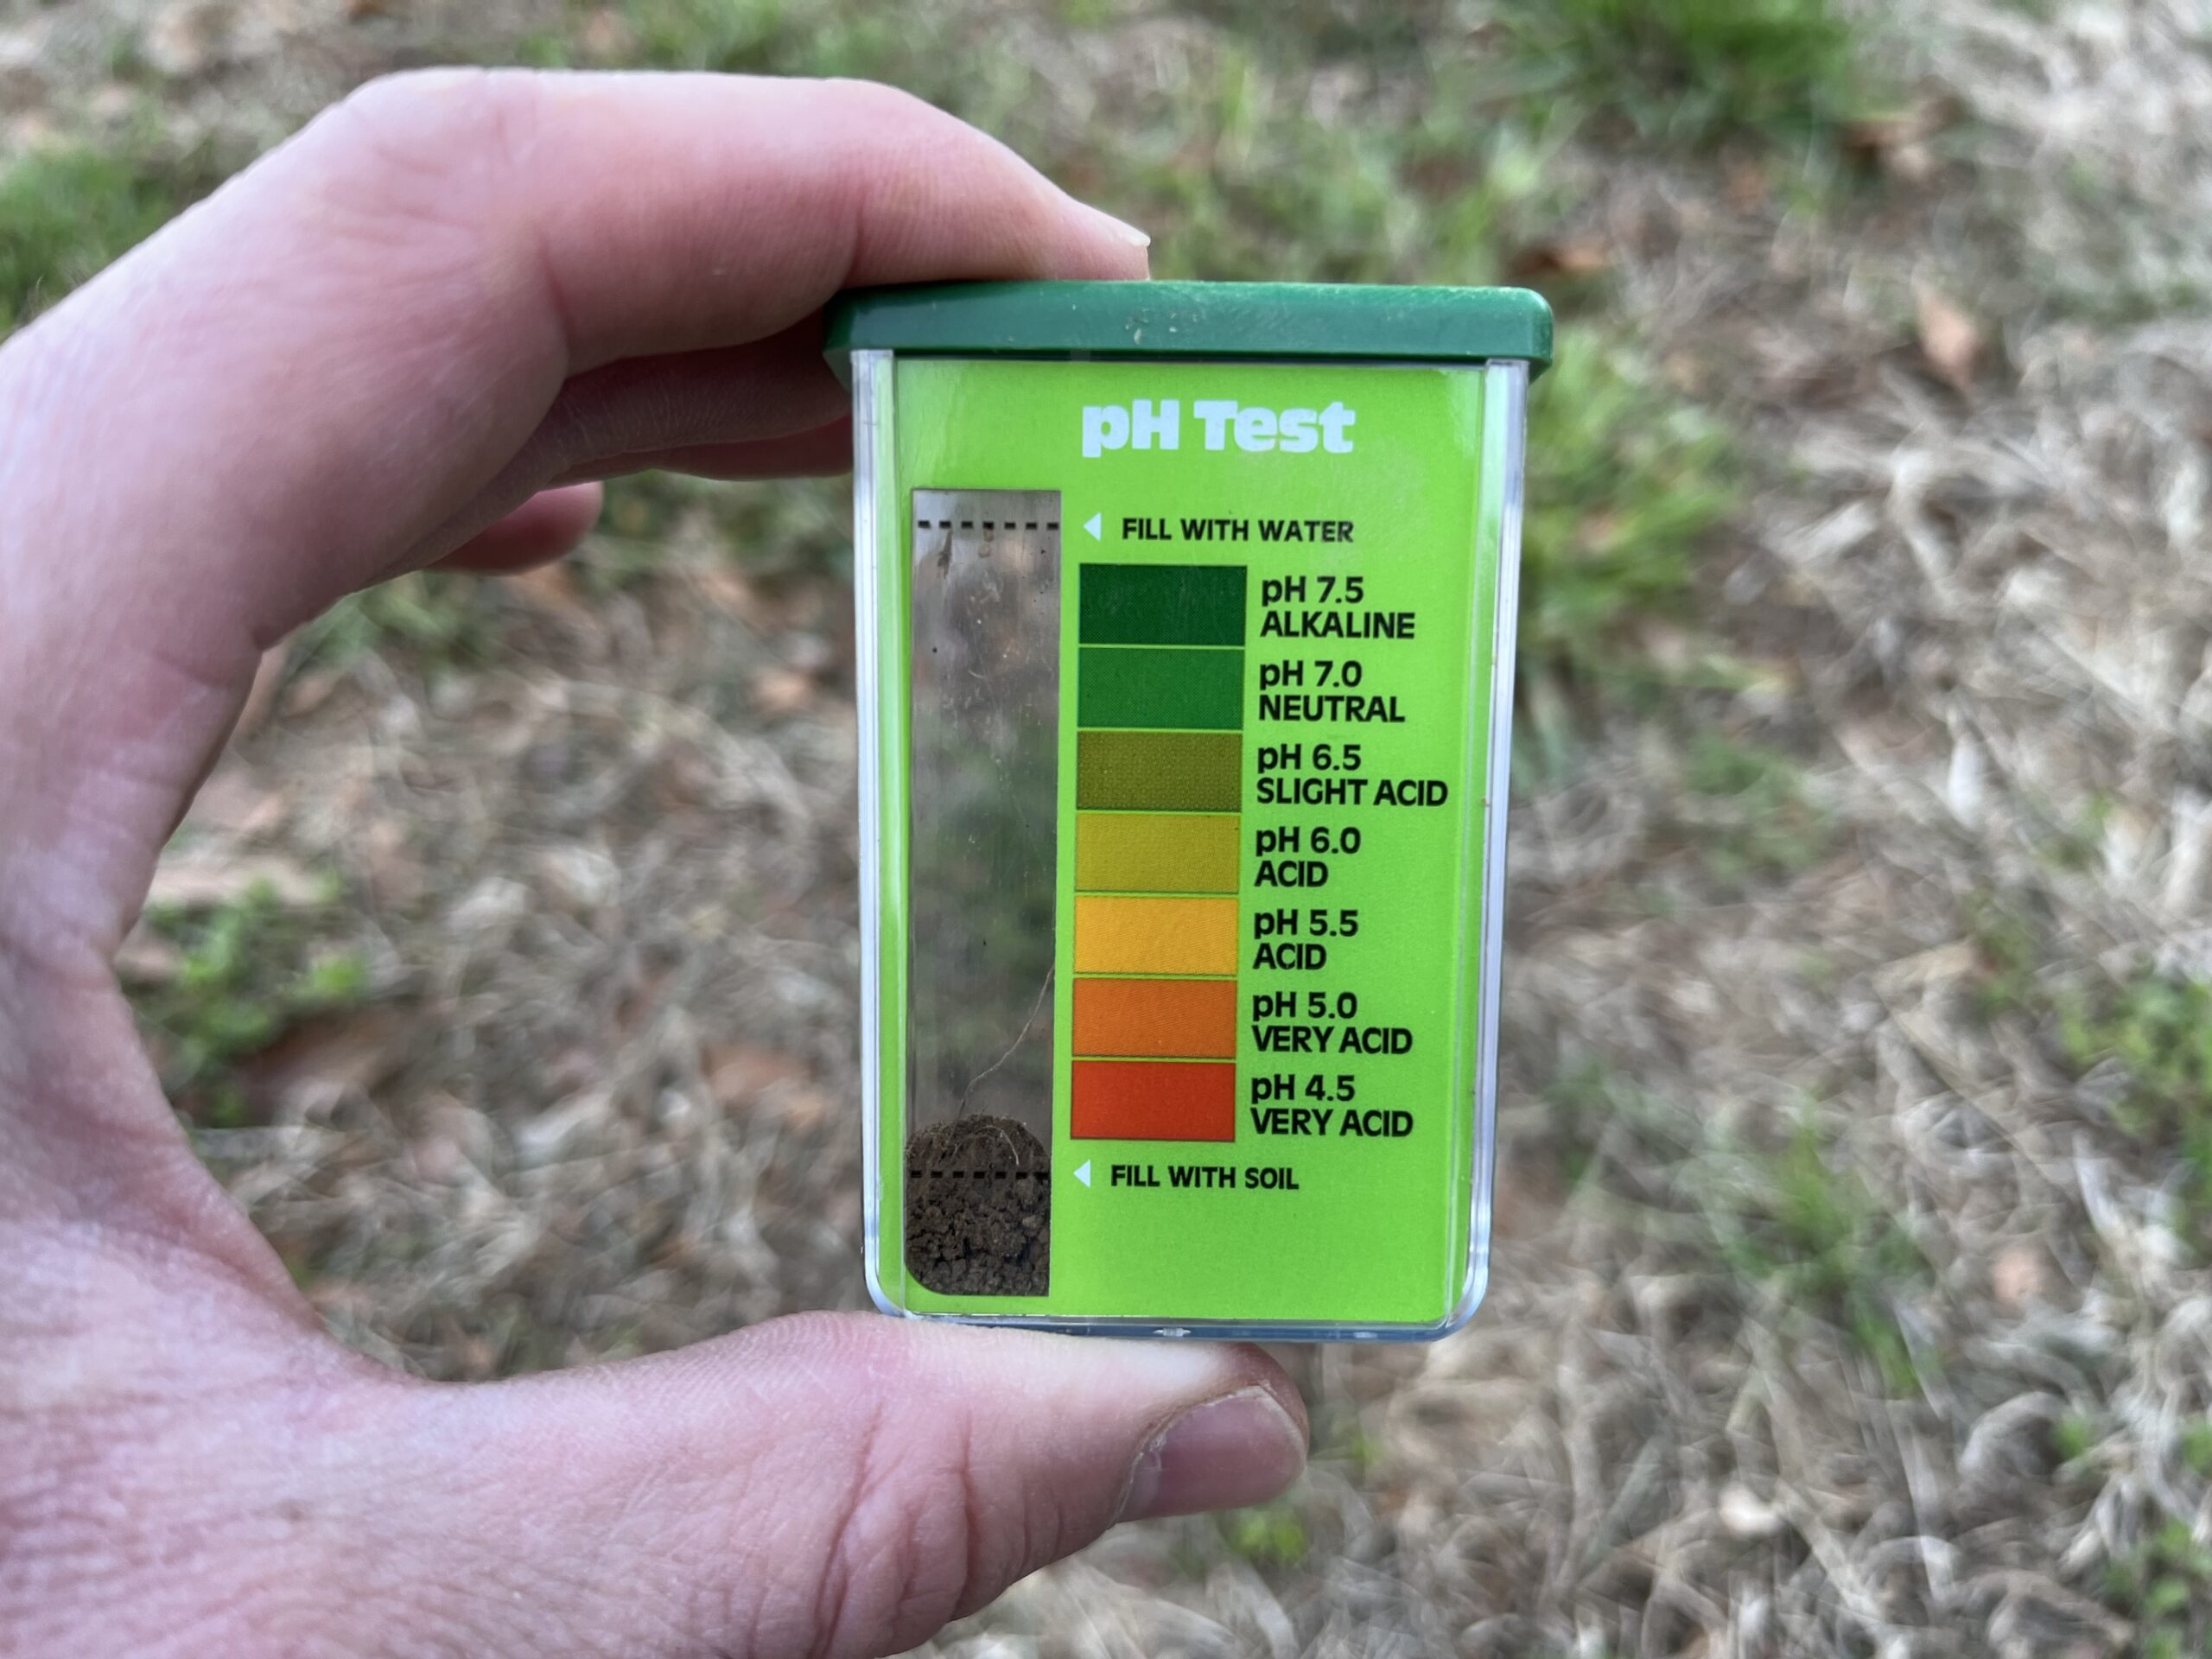 The Luster Leaf RapiTest Soil Test Kit is another viable option.